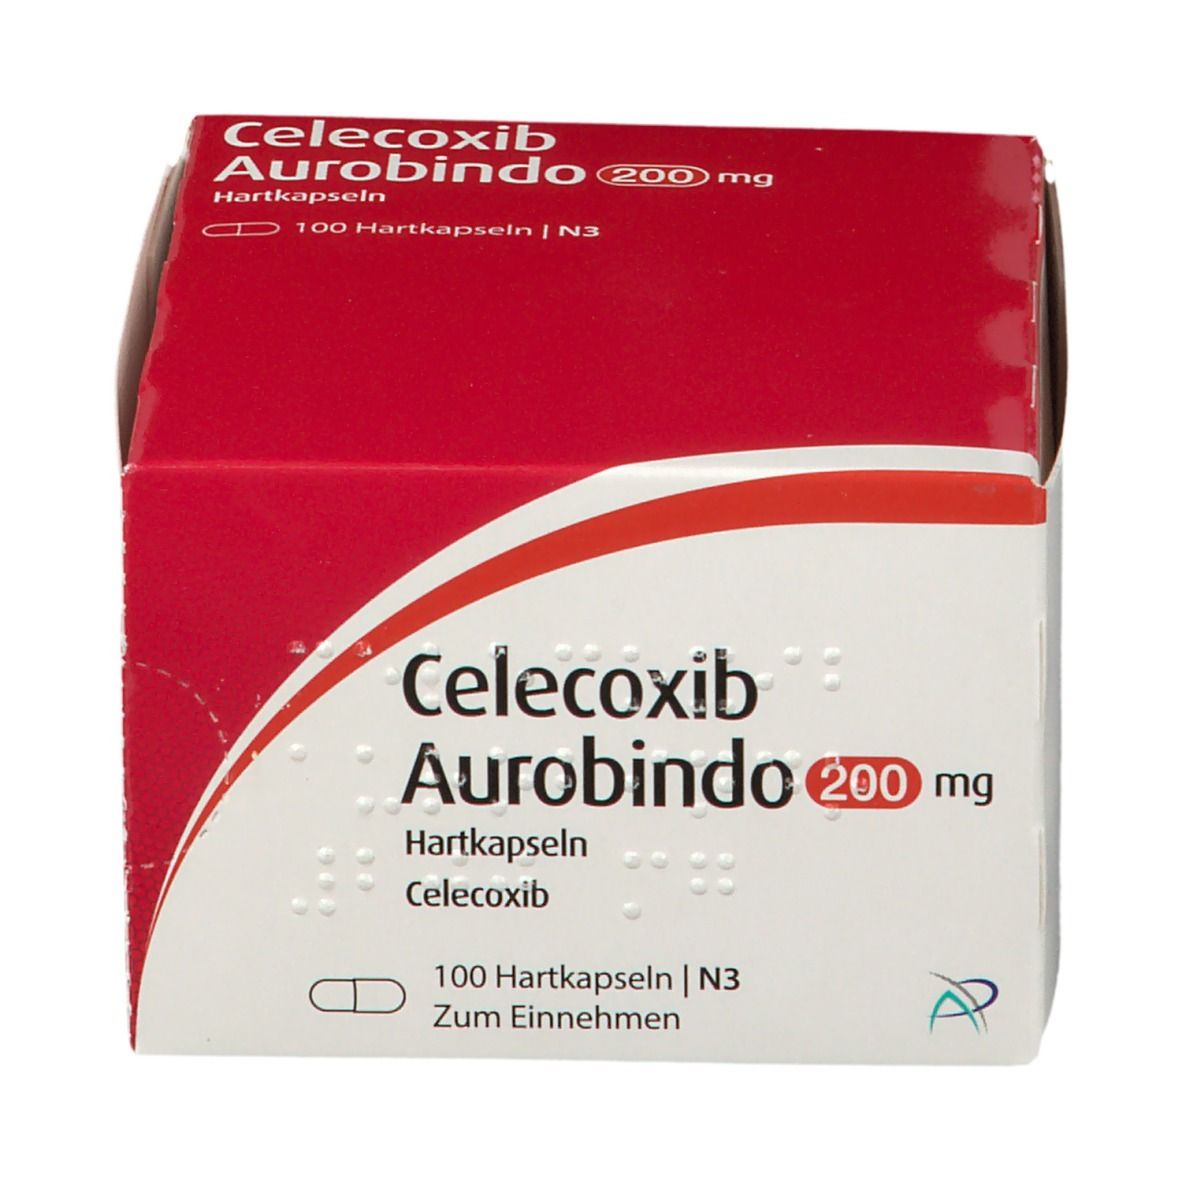 Celecoxib Aurobindo 200 mg